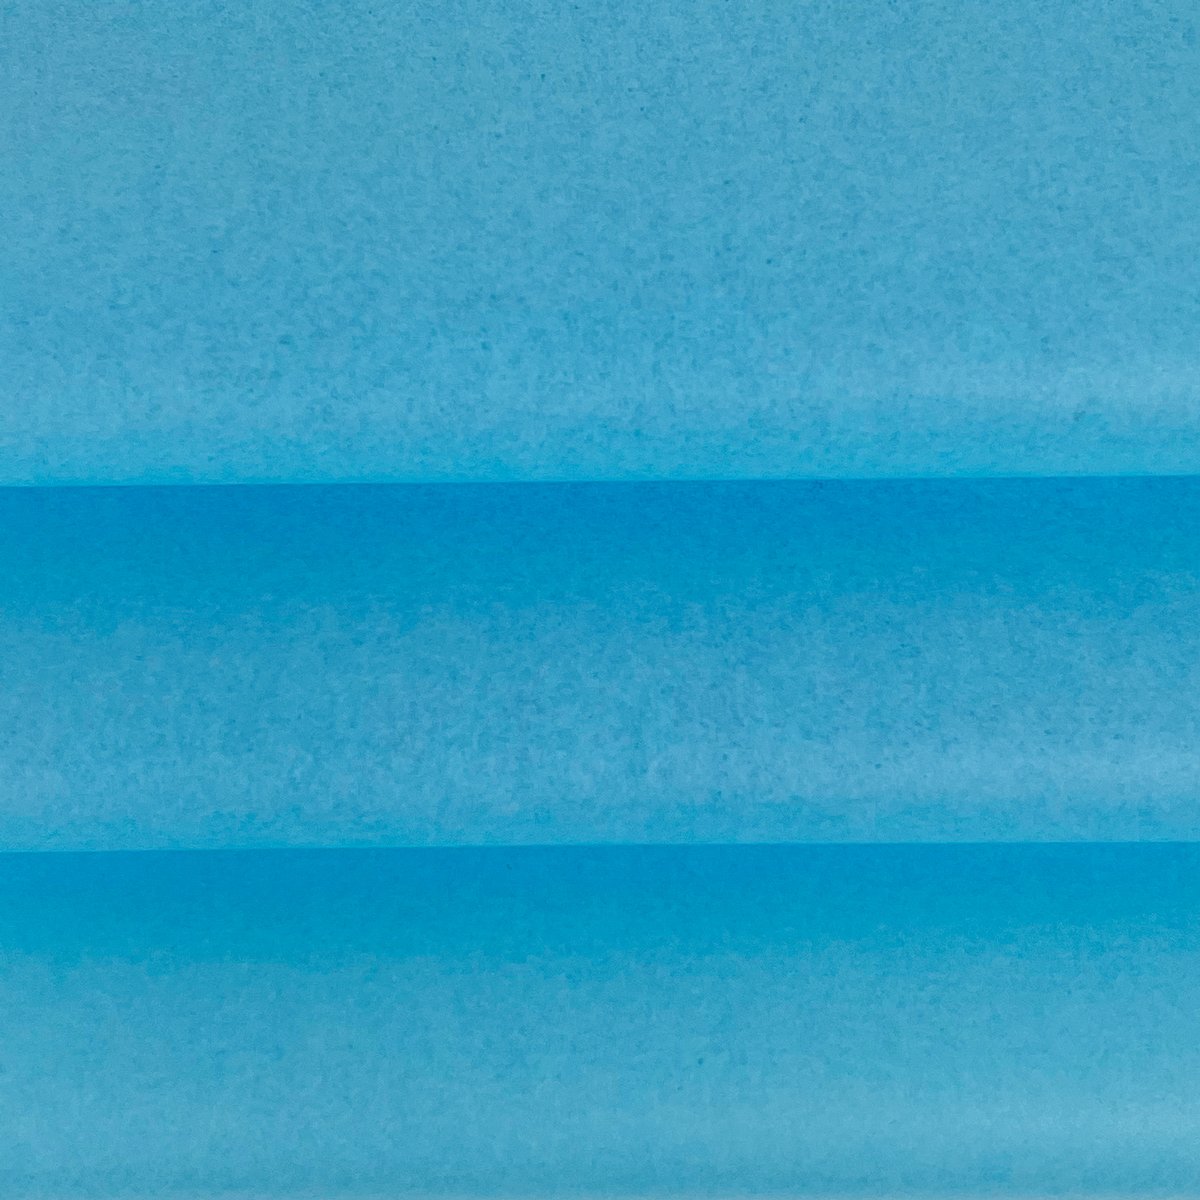 Vloeipapier kleur Blauw